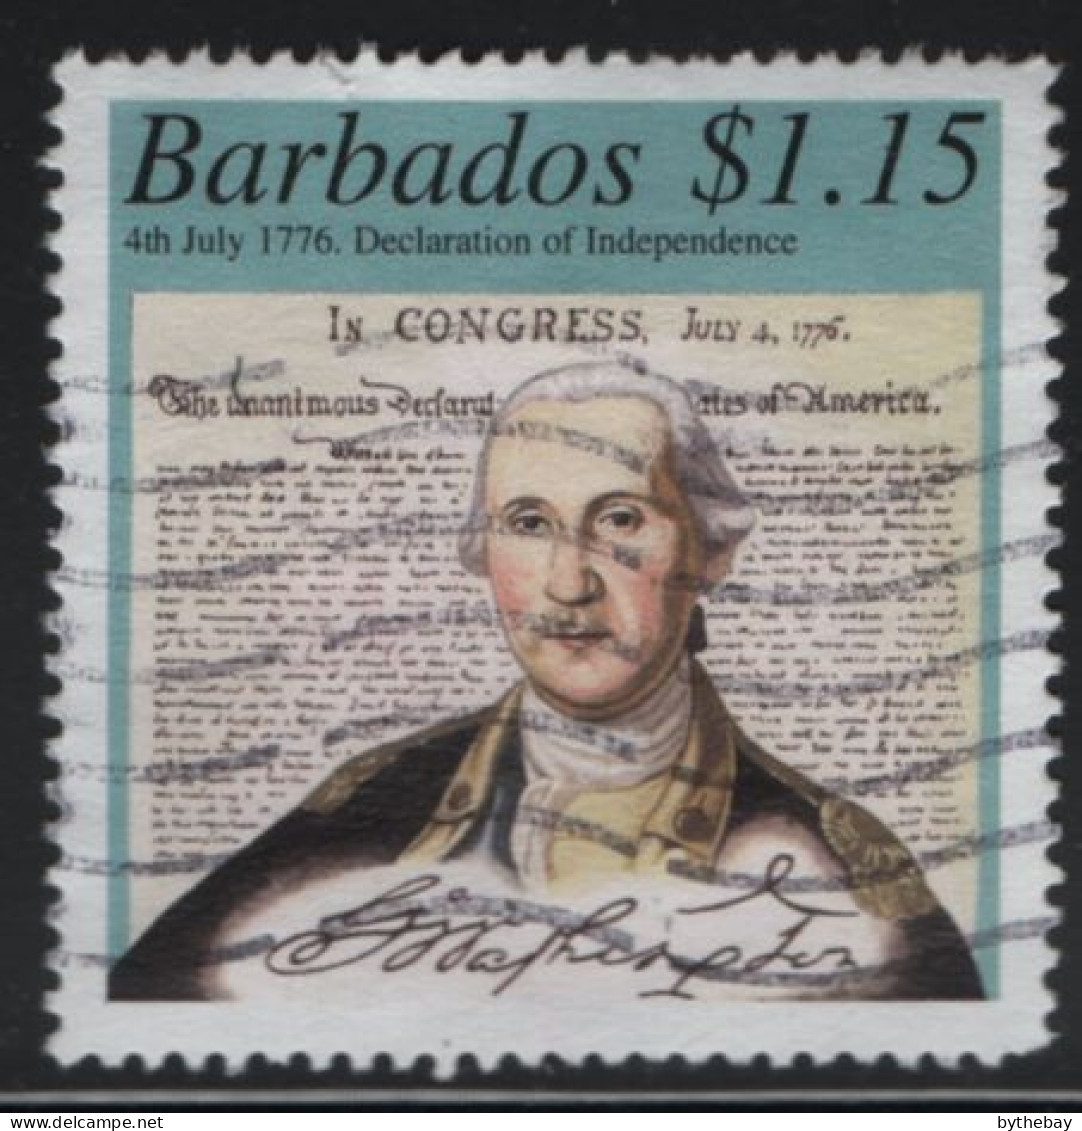 Barbados 2001 Used Sc 1012 $1.15 Washington, Declaration Of Independence - Barbados (1966-...)